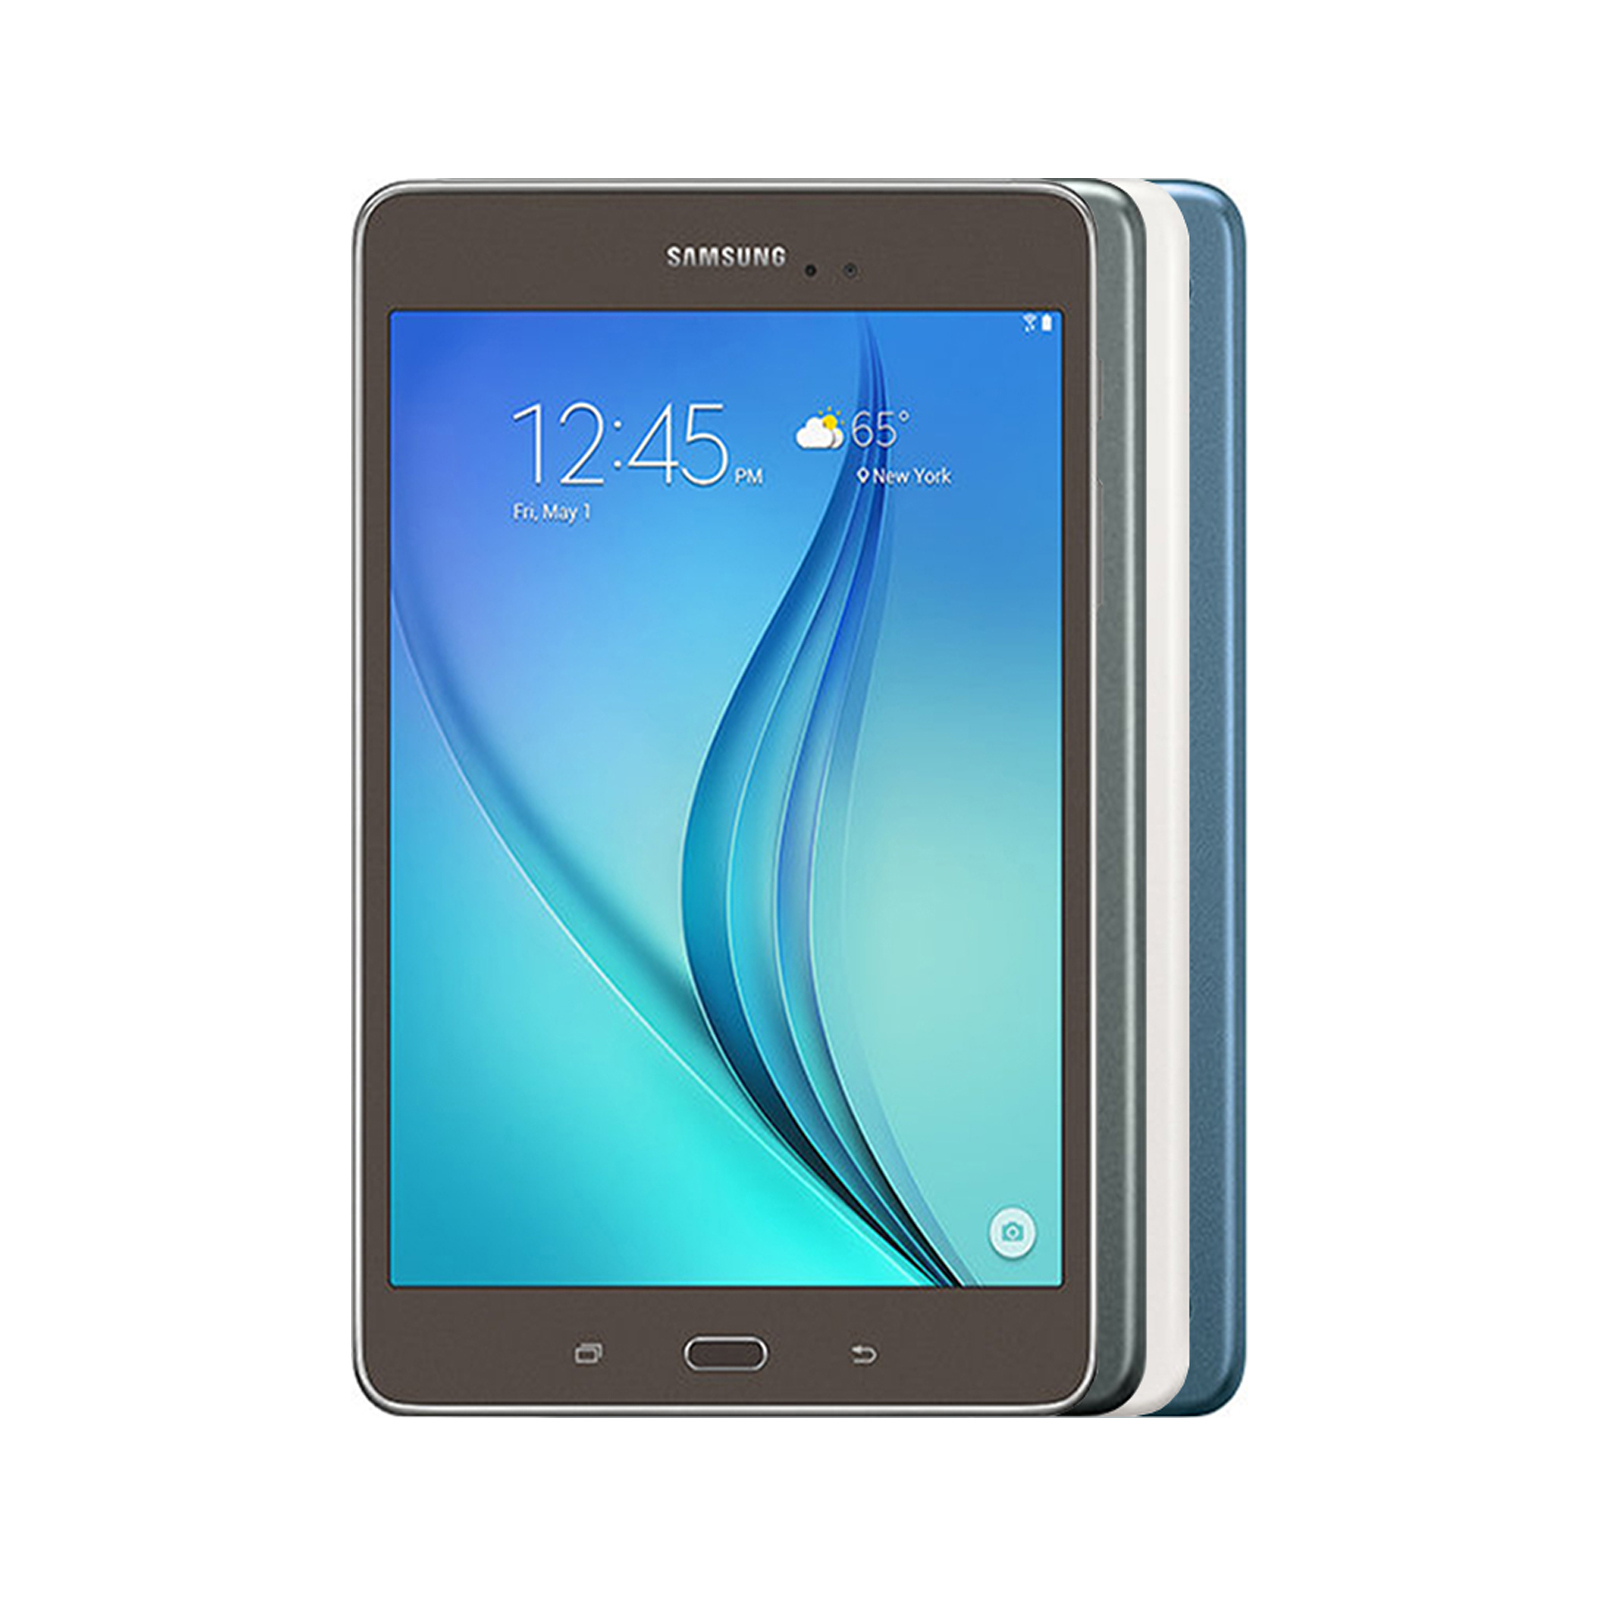 Samsung Galaxy Tab A 9.7 - Very Good Condition